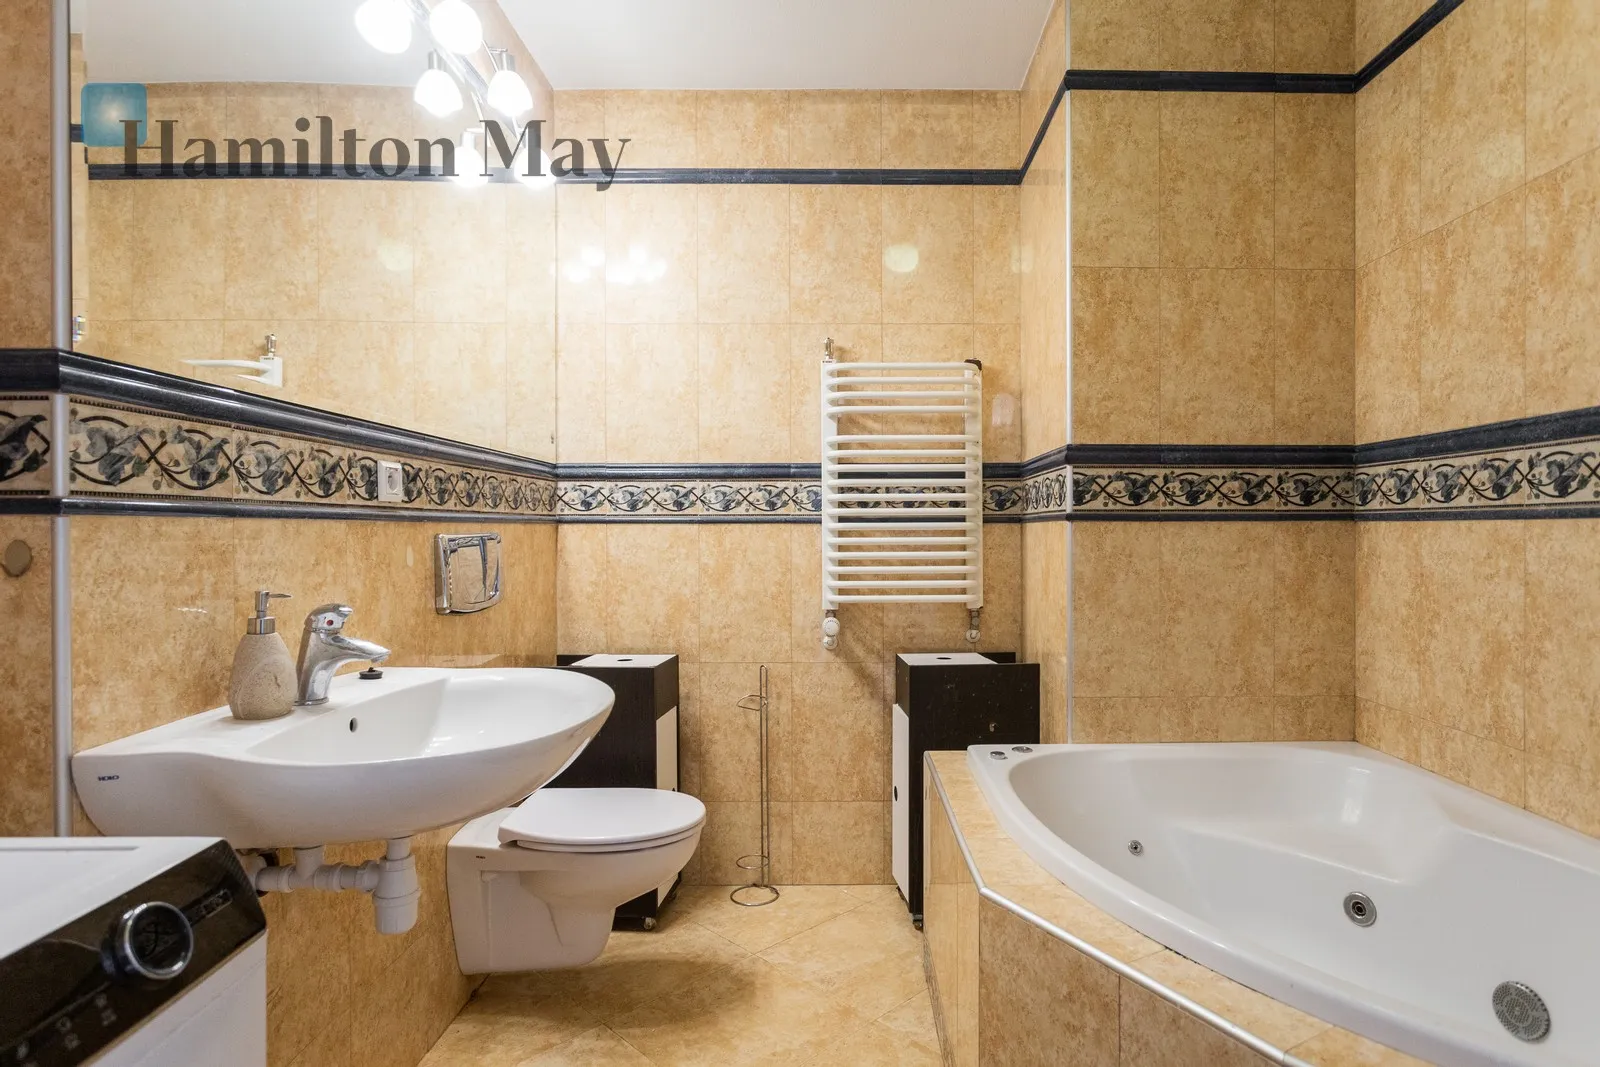 Distance to centre: 1 km Level: 5 Price: 4500 PLN Bedrooms: 2 Bathrooms: 1 Size: 76m2 Price/m2: 59 PLN